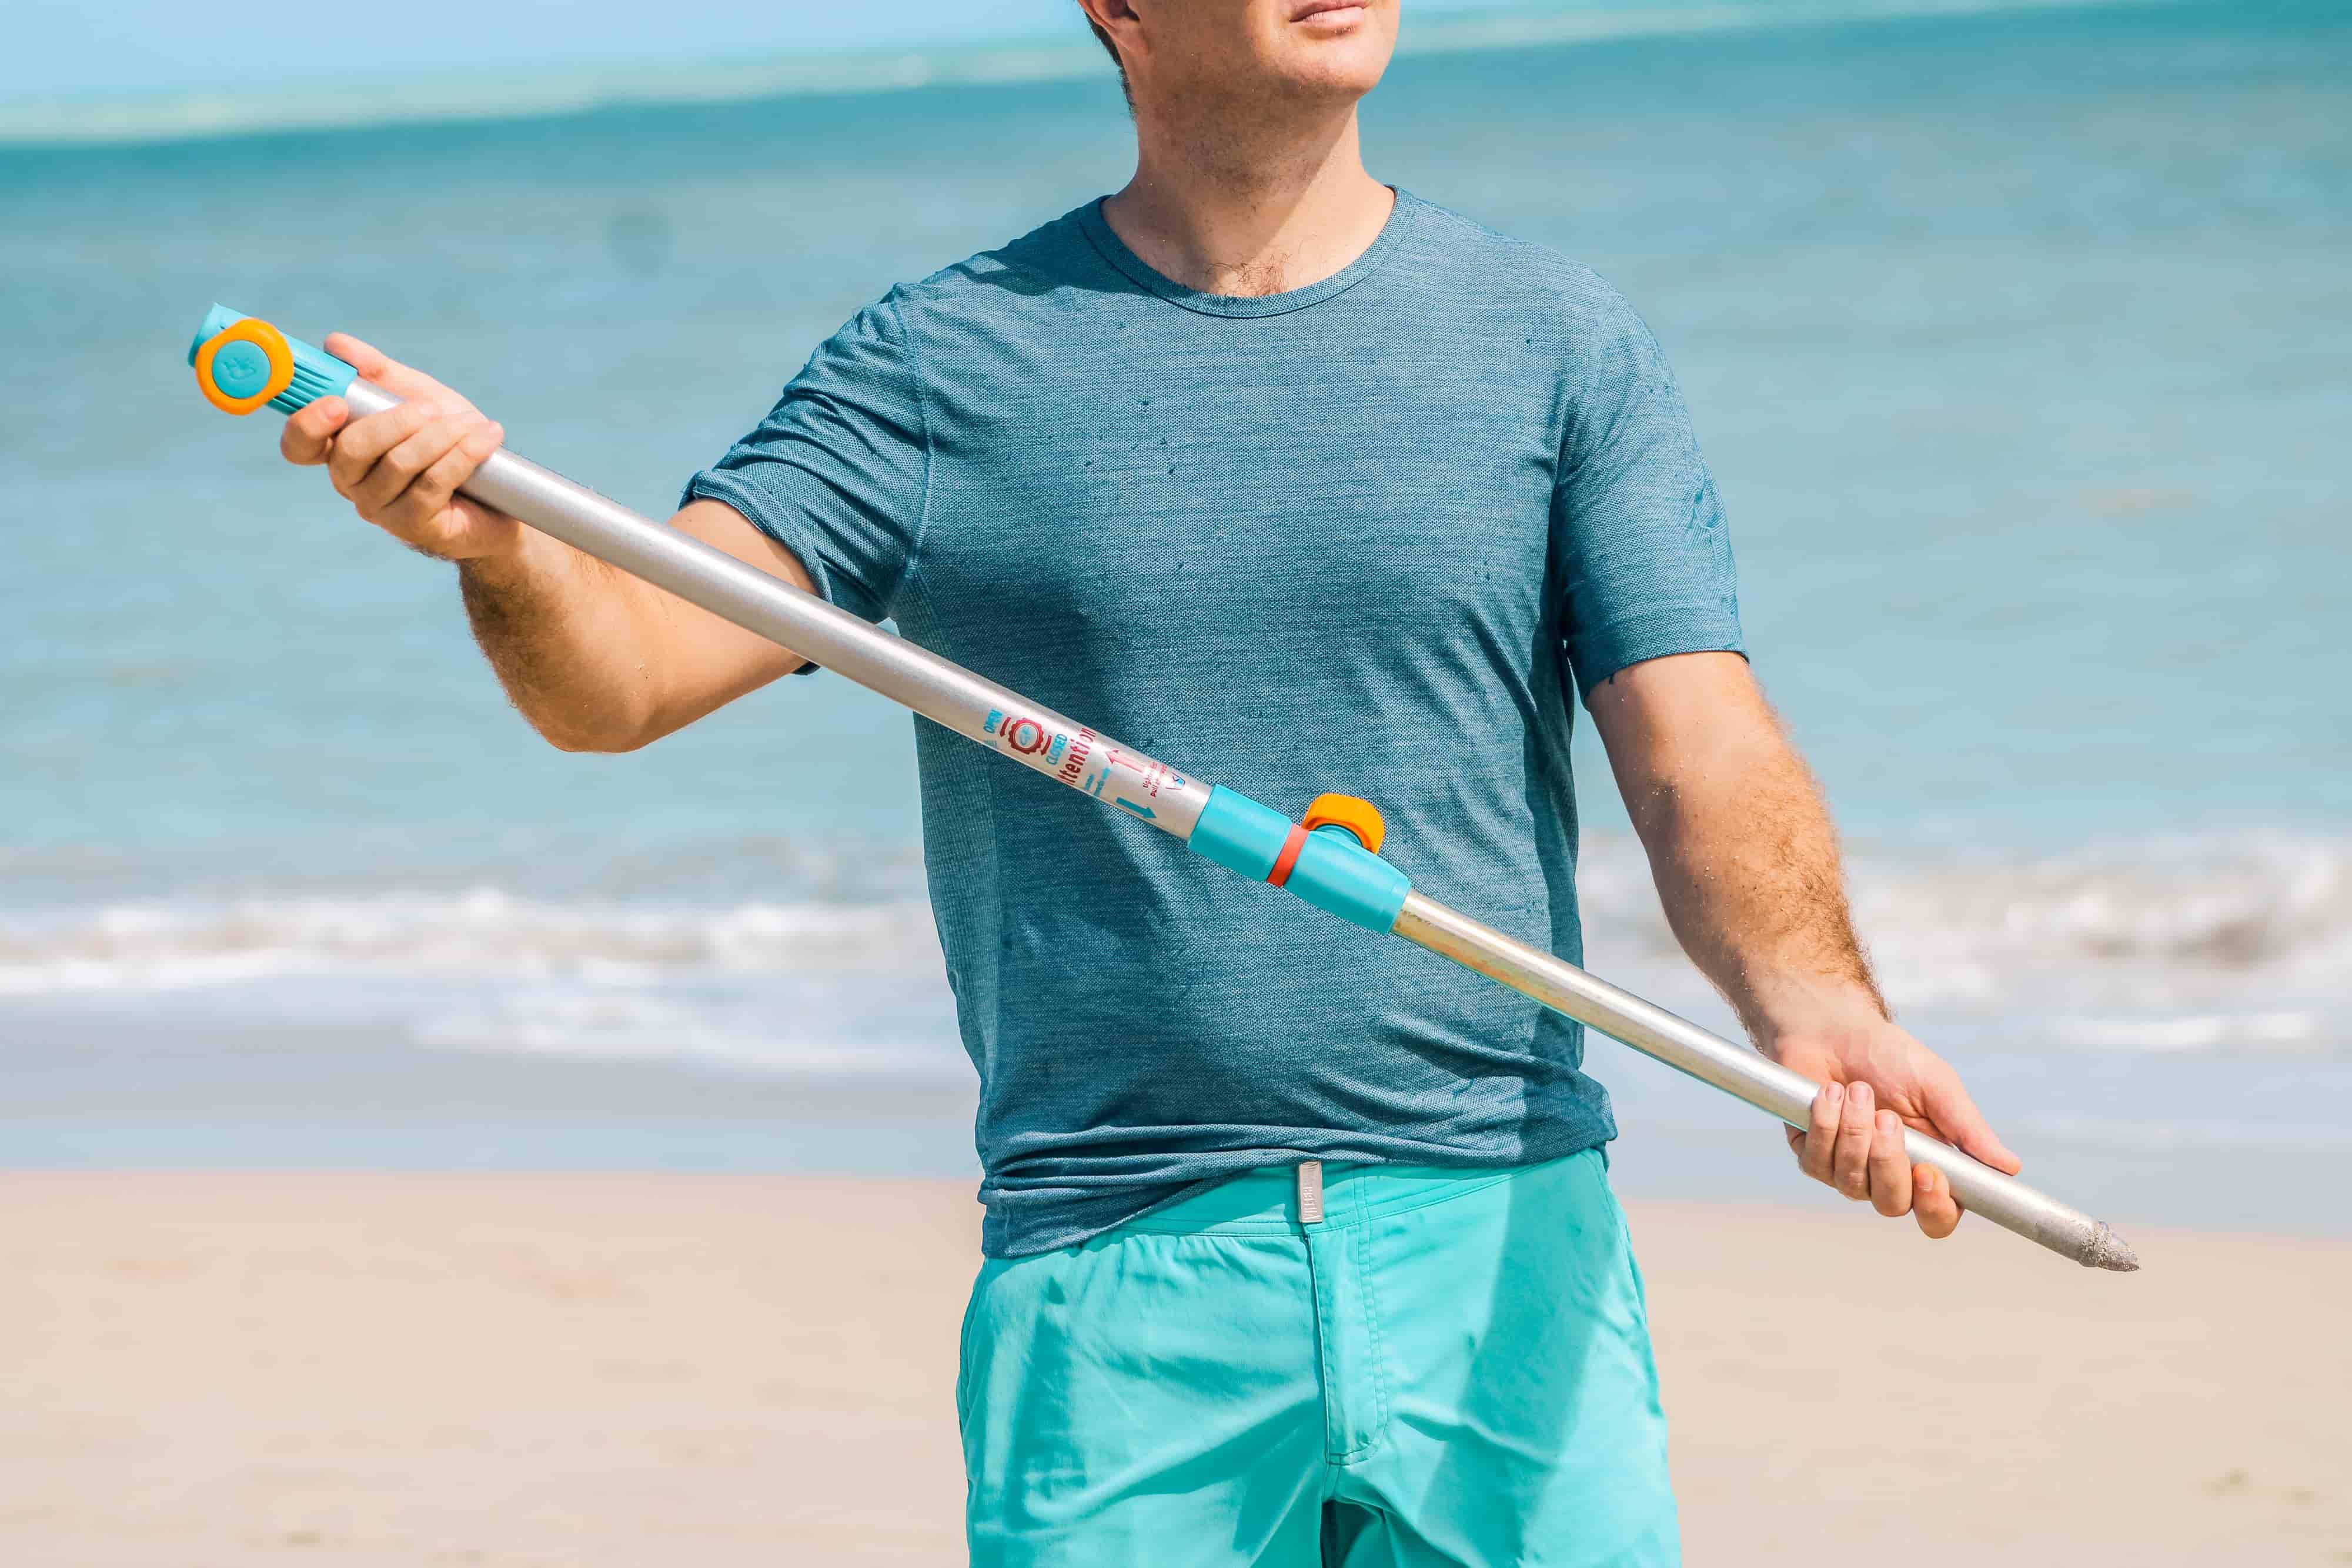 Person holding the Handy Beach Anchor that secures beach umbrellas